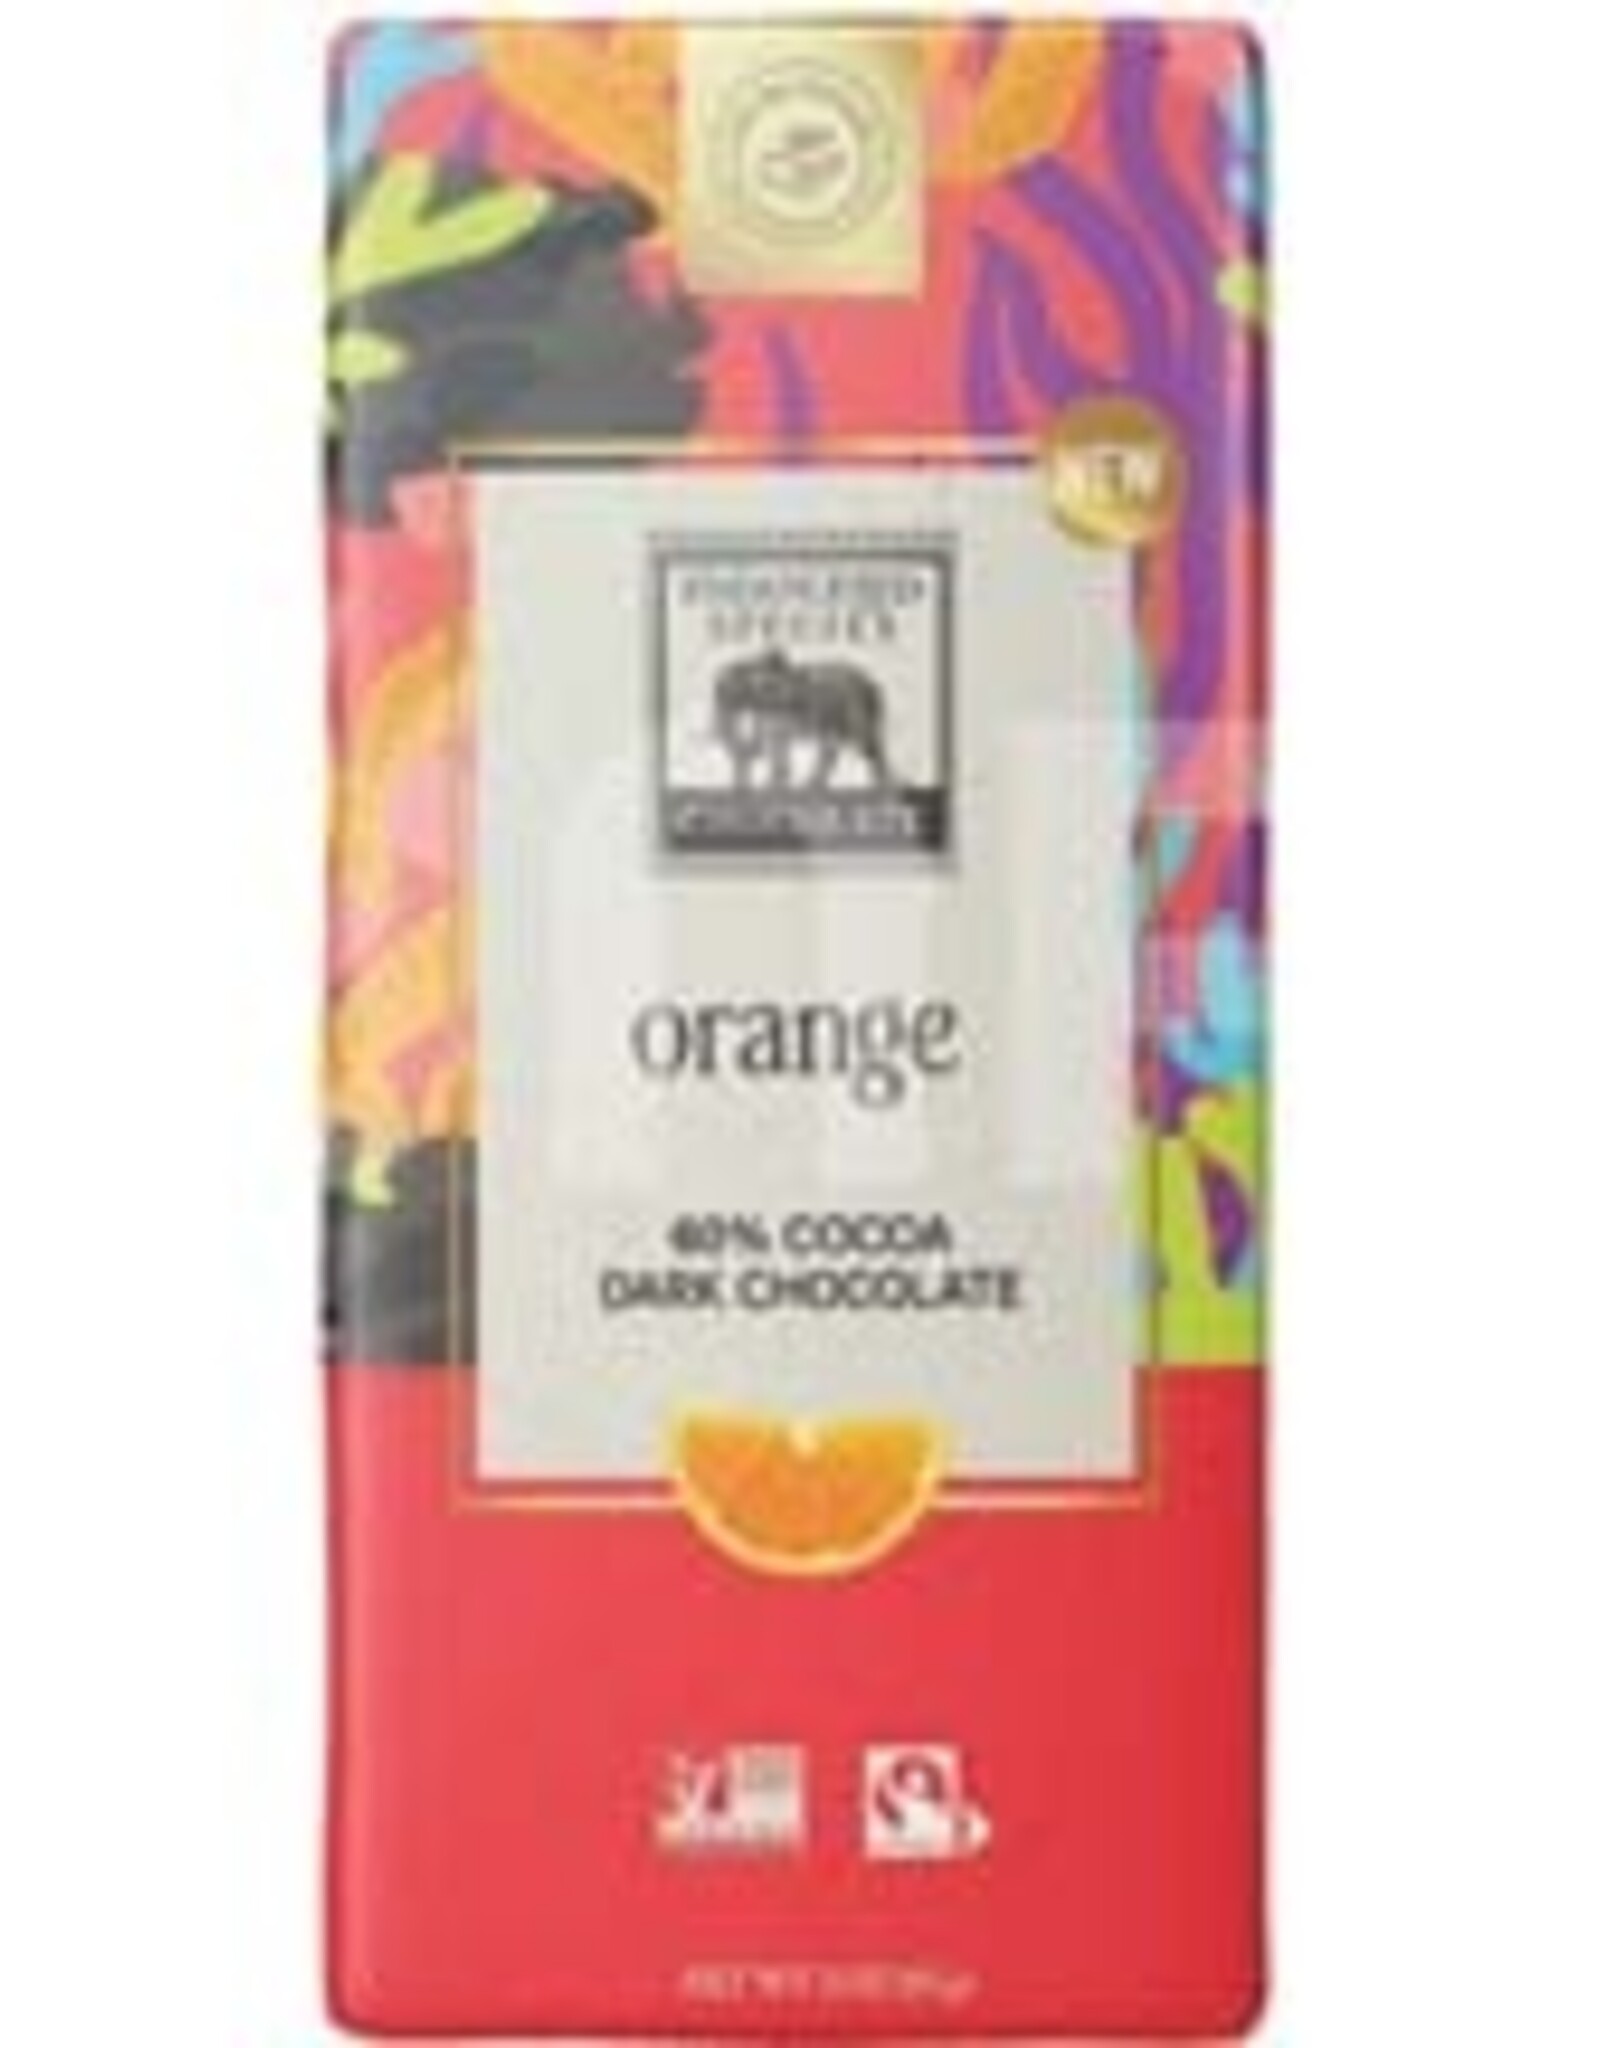 ENDGD Dark Chocolate Orange, Coral 3 oz